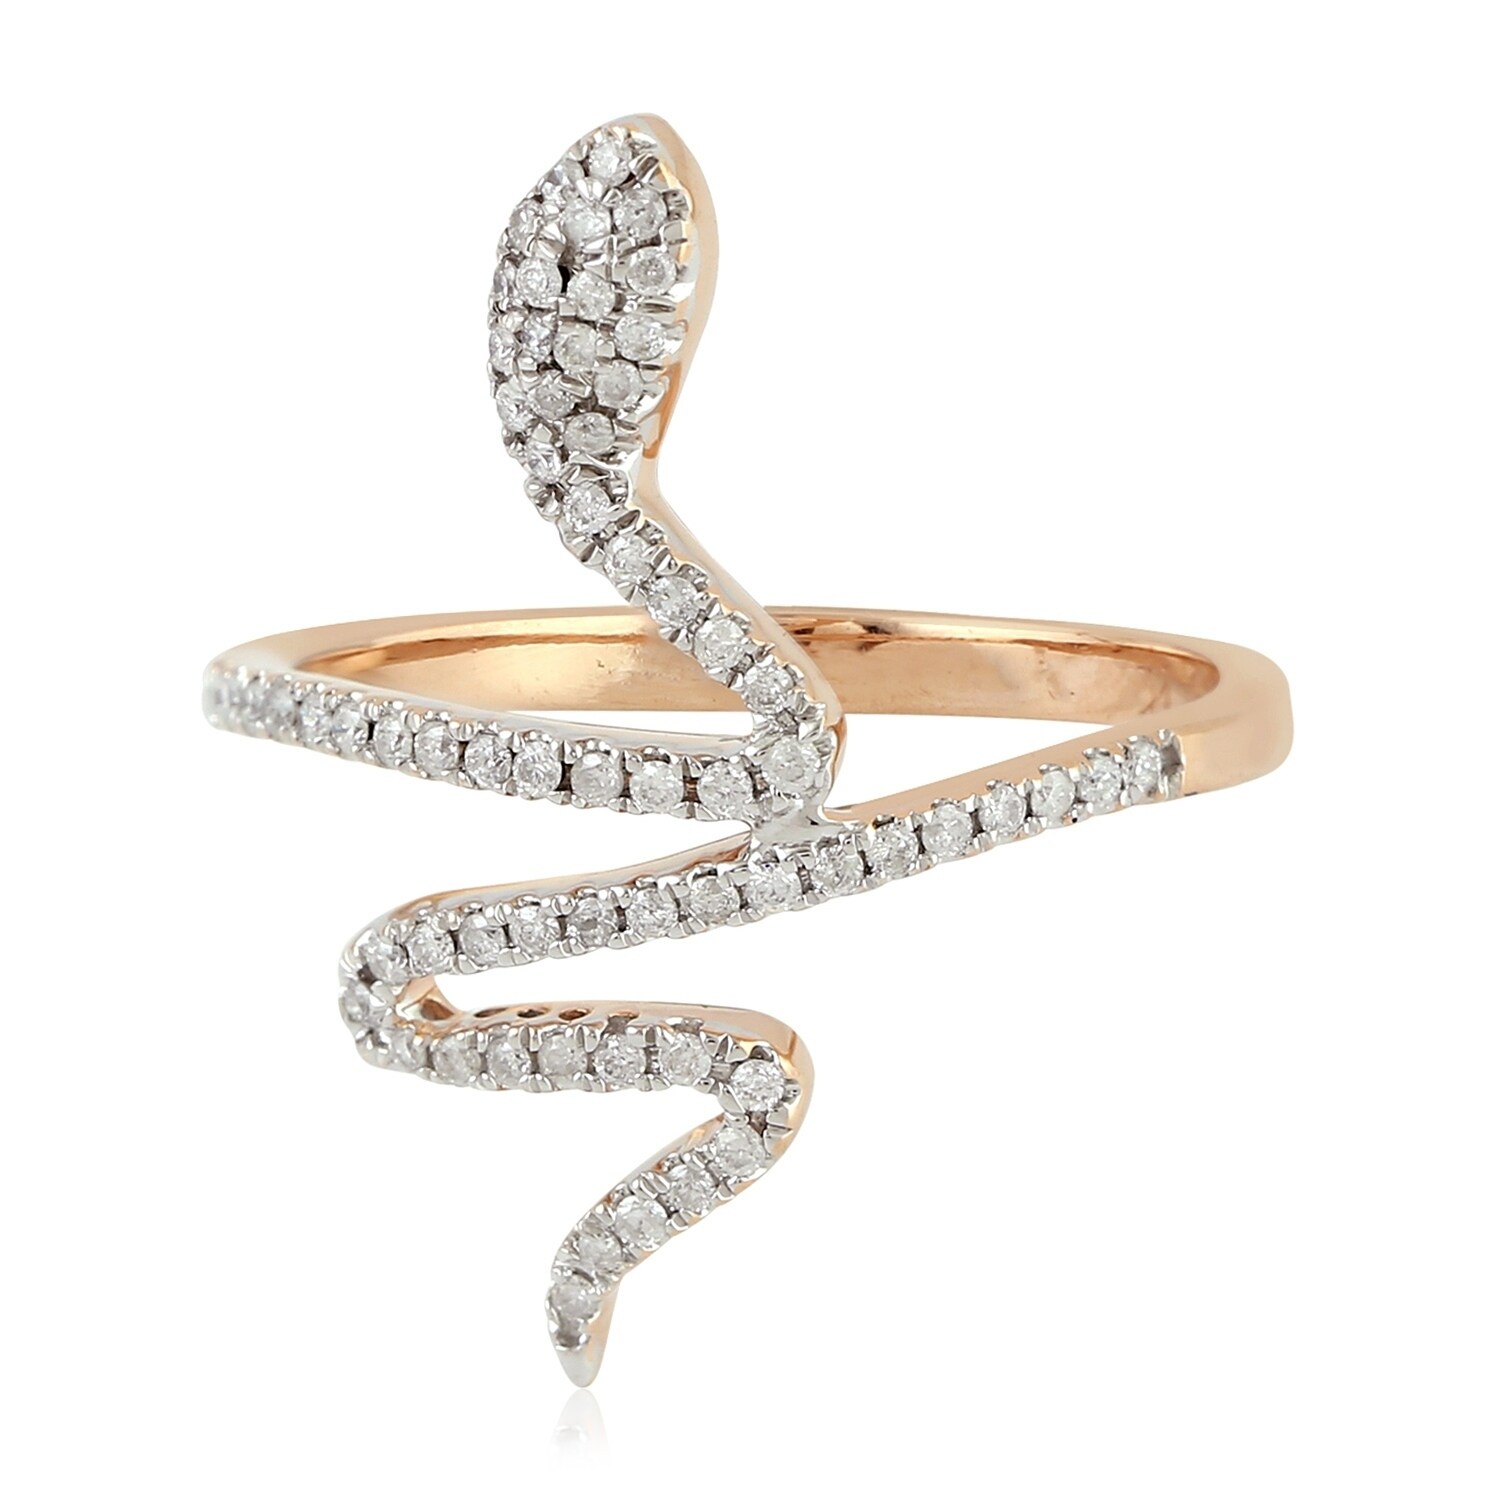 Diamond Snake Ring - The Best Original Gemstone